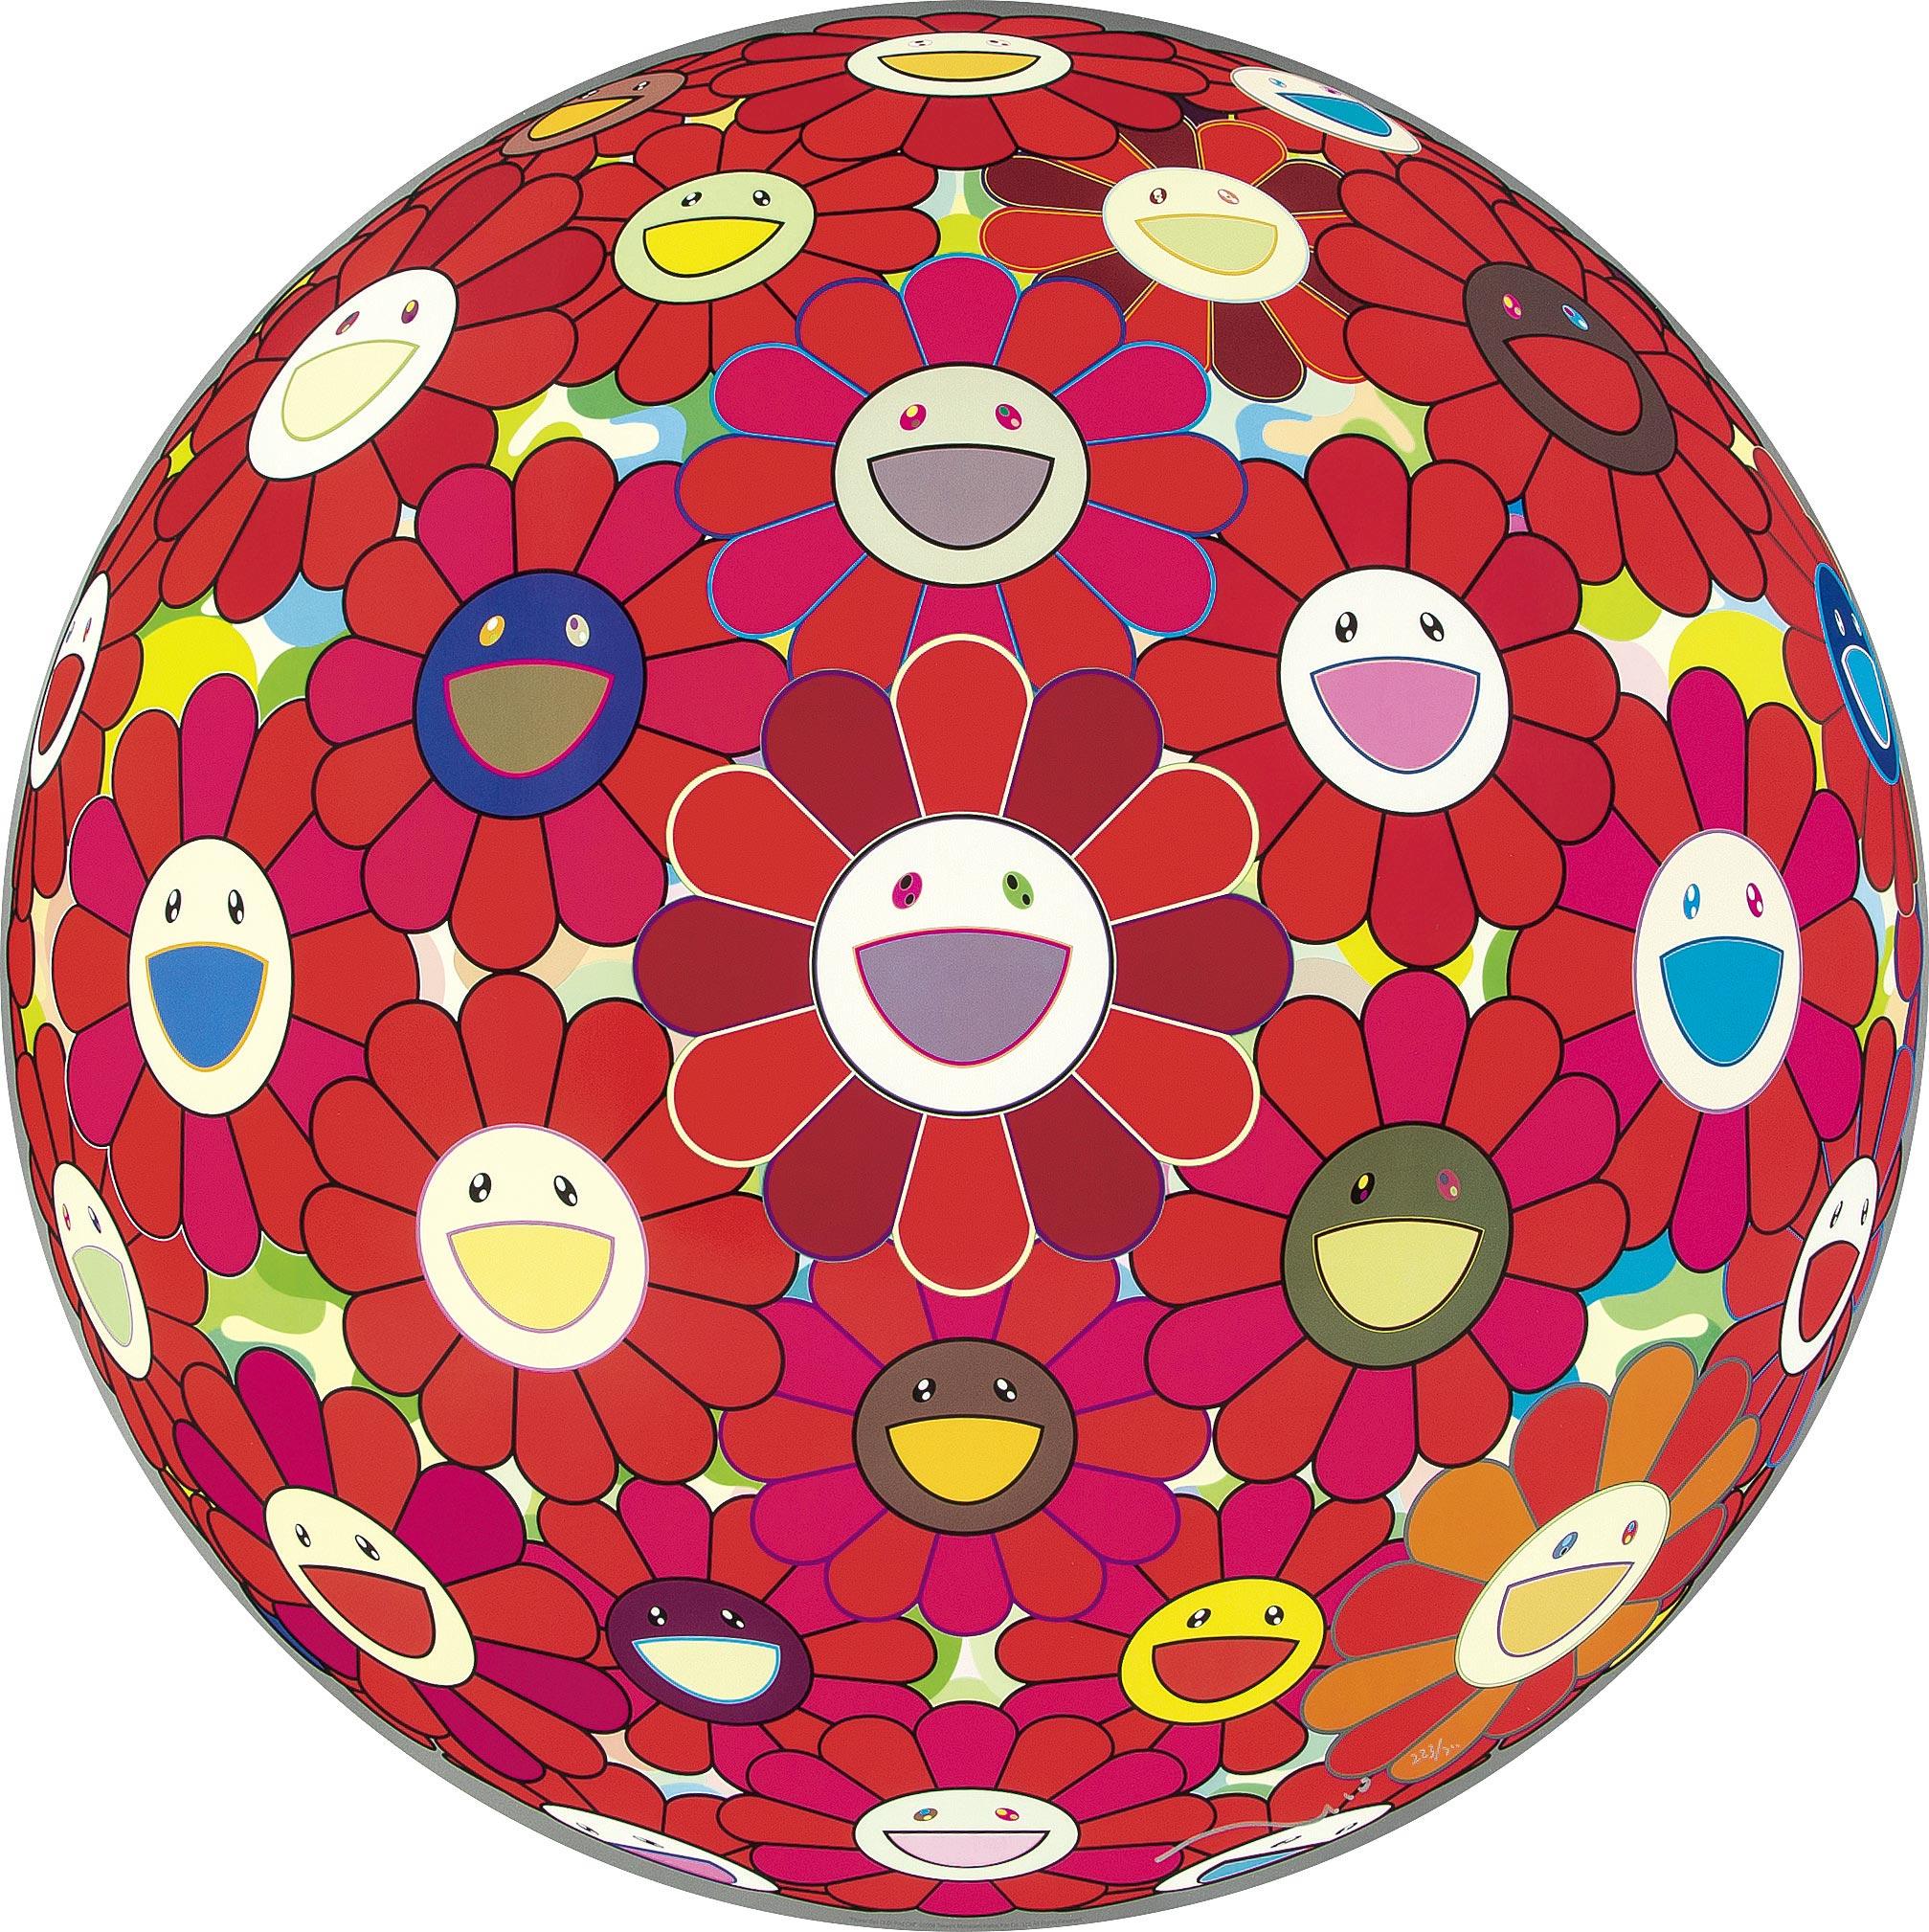 Figurative Print Takashi Murakami - Ball à fleurs (3D) Red Cliff édition limitée (impression) de Murakami signée, numérotée